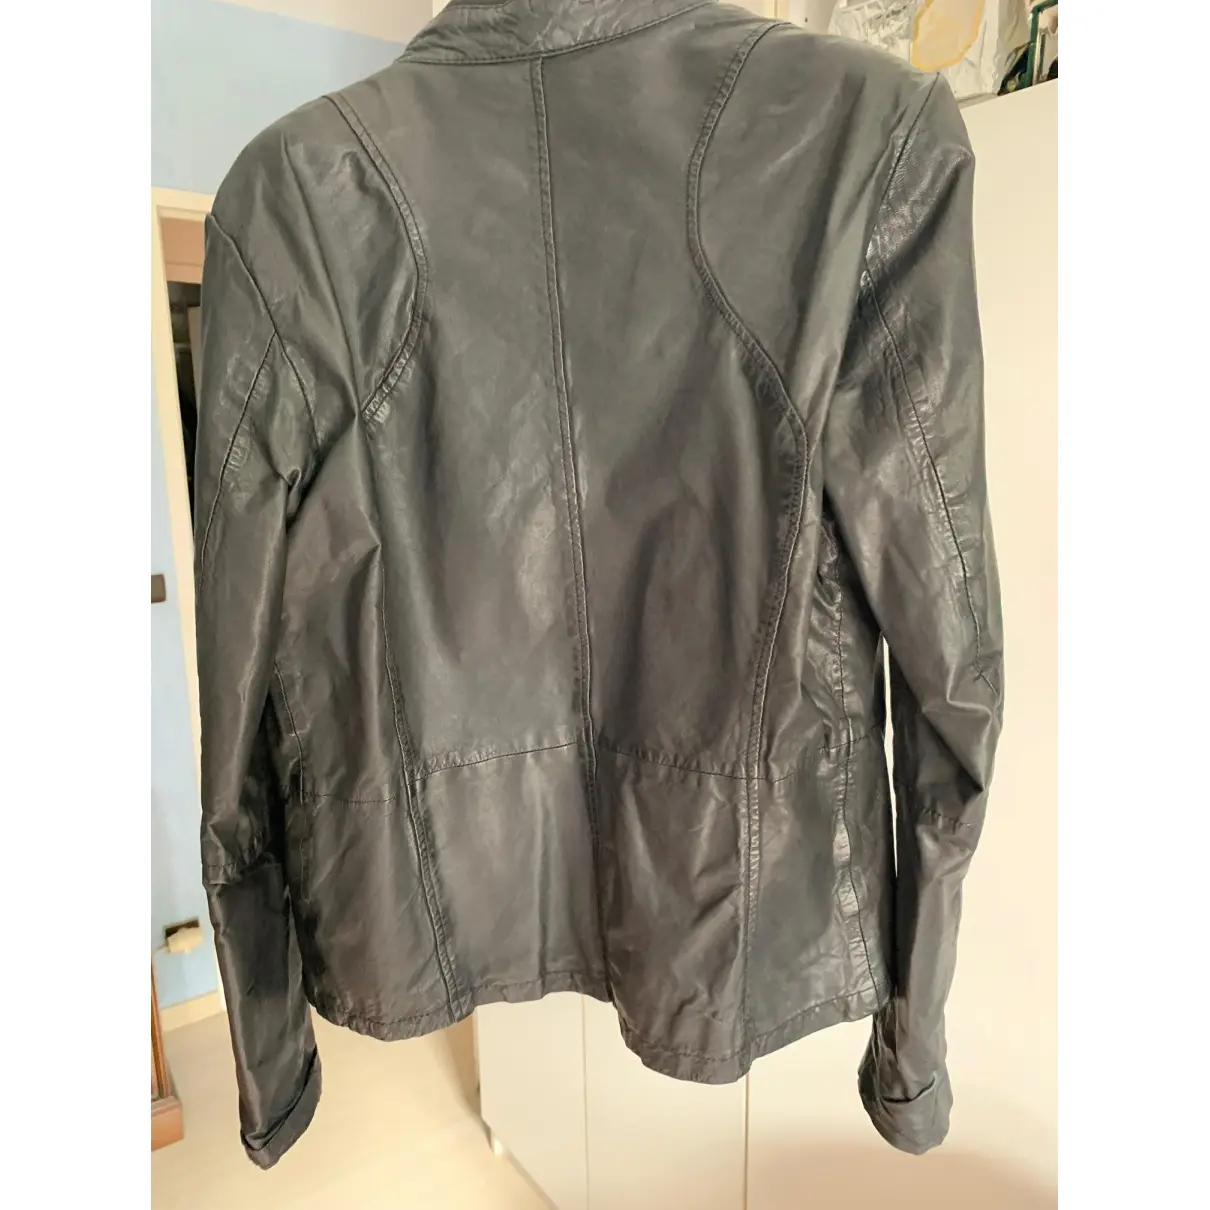 Buy Ikks Leather jacket online